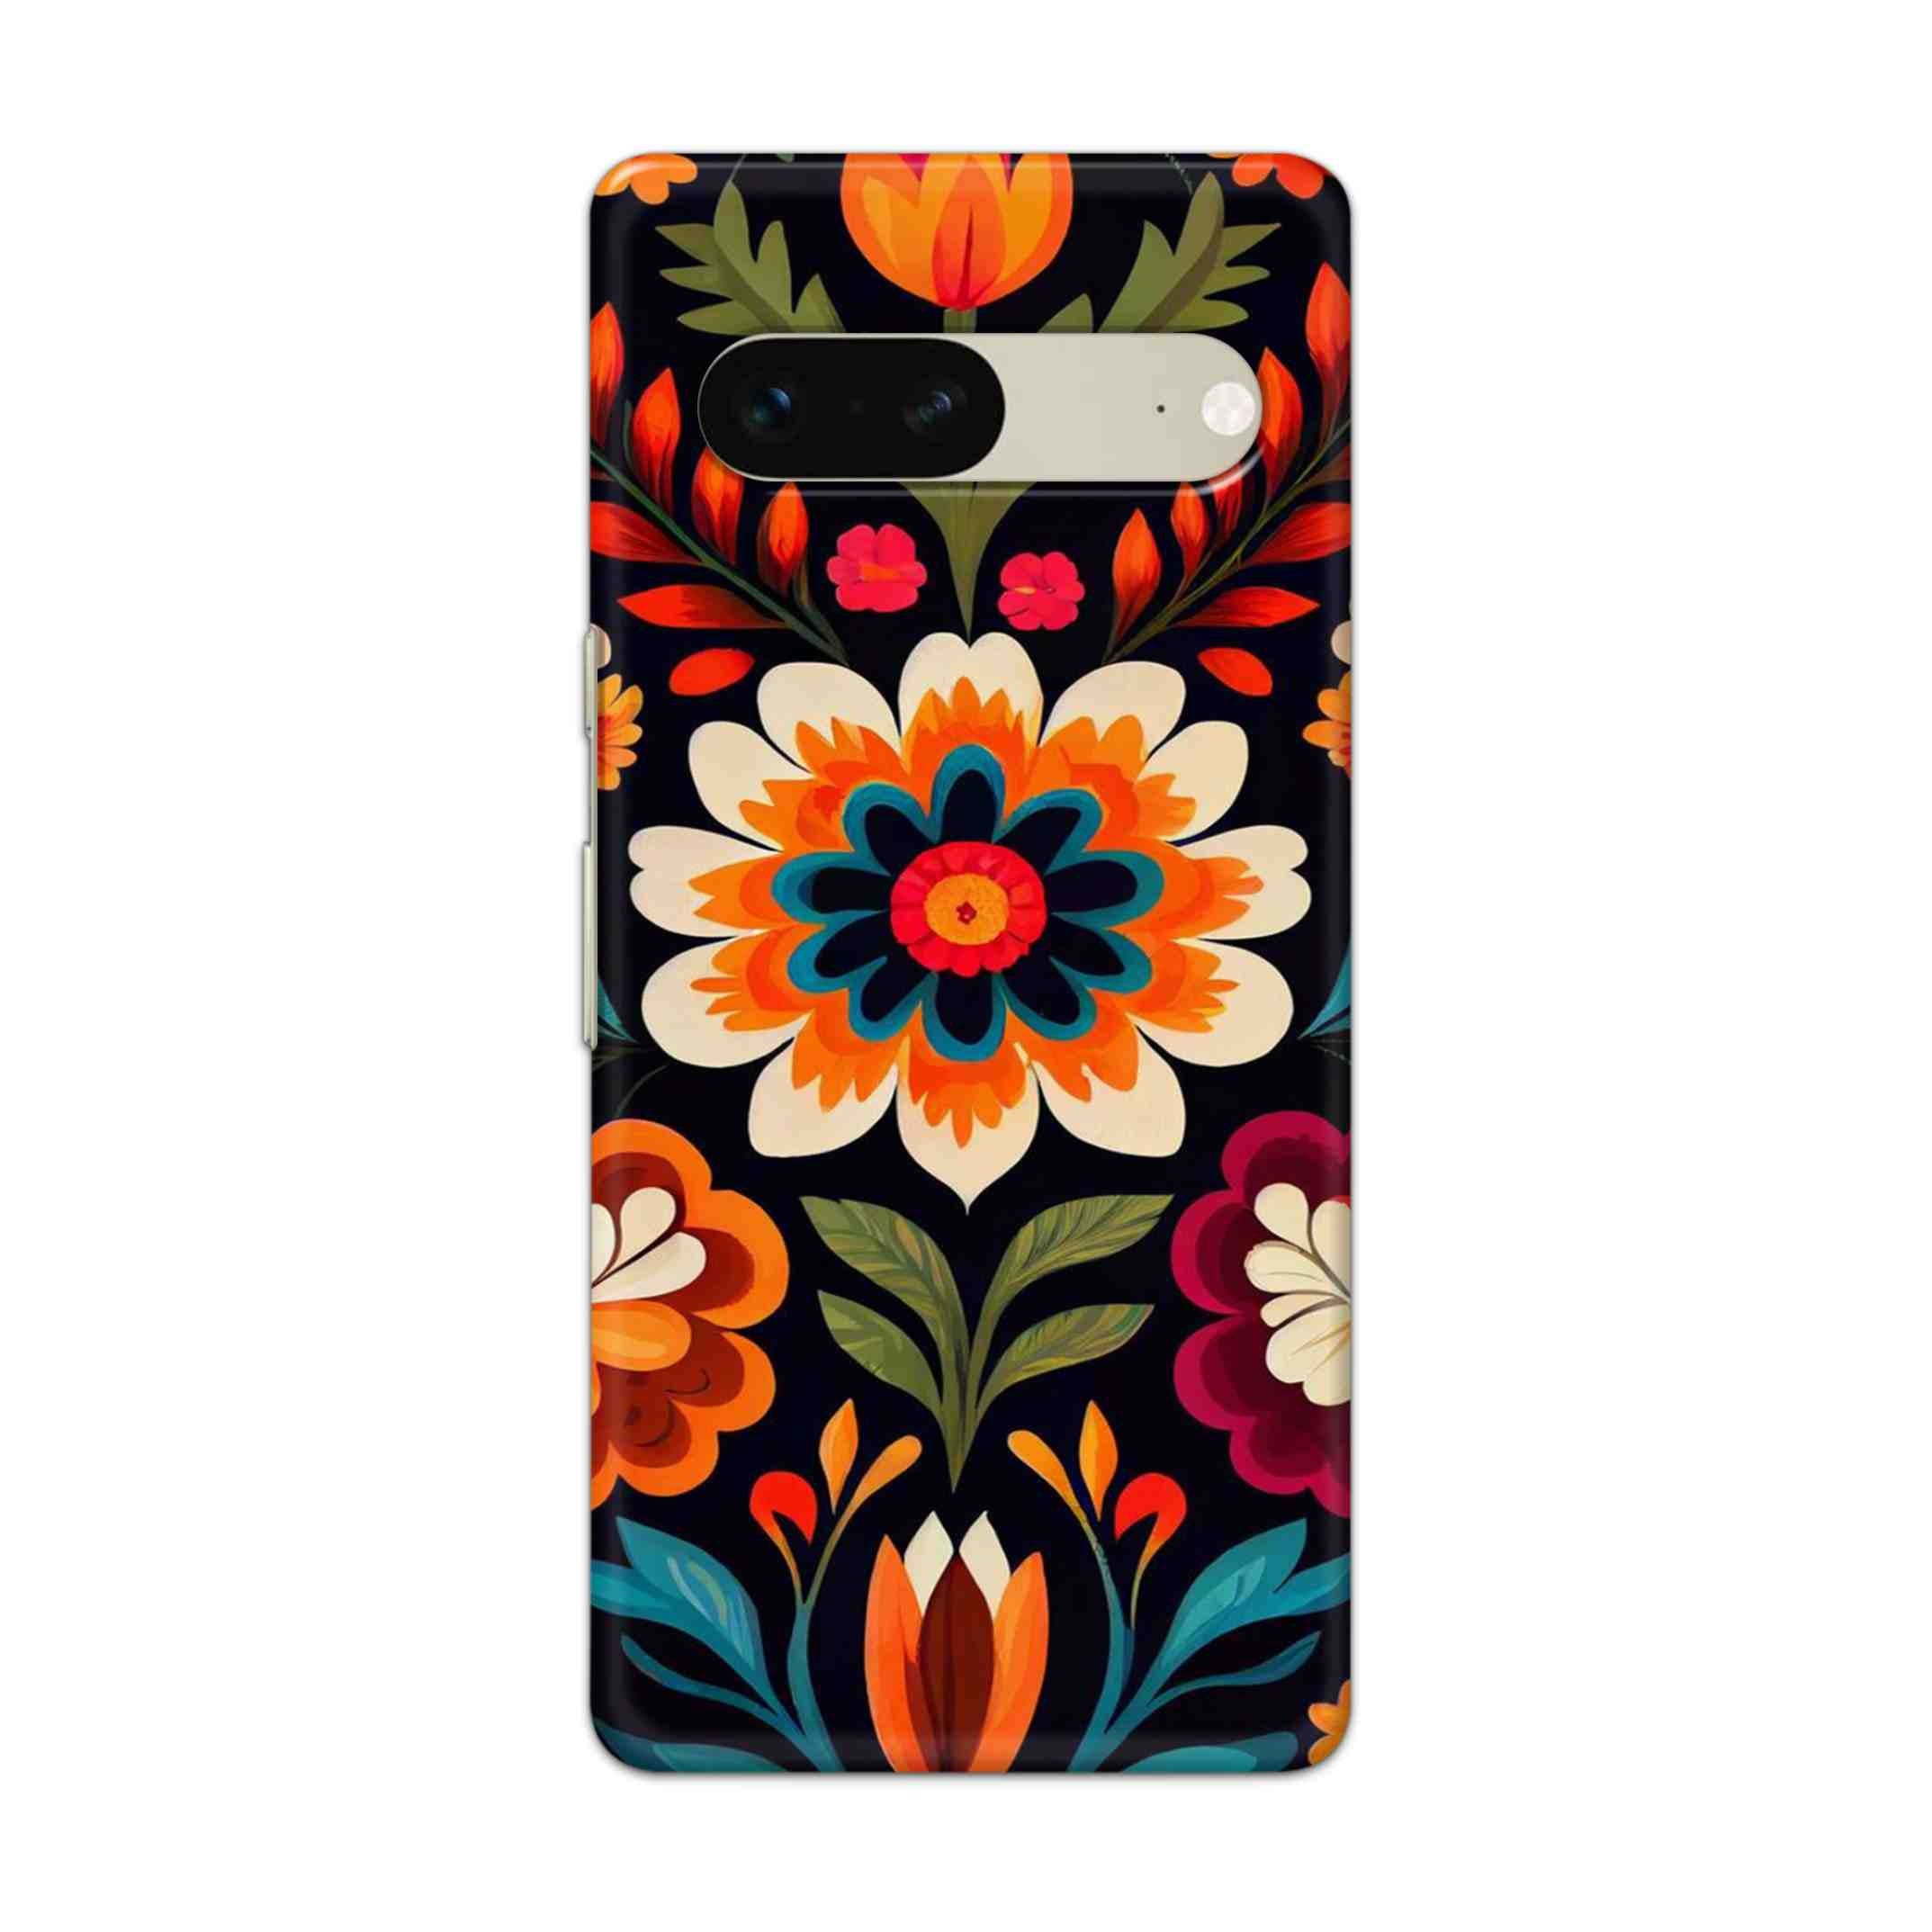 Buy Flower Hard Back Mobile Phone Case Cover For Google Pixel 7 Online